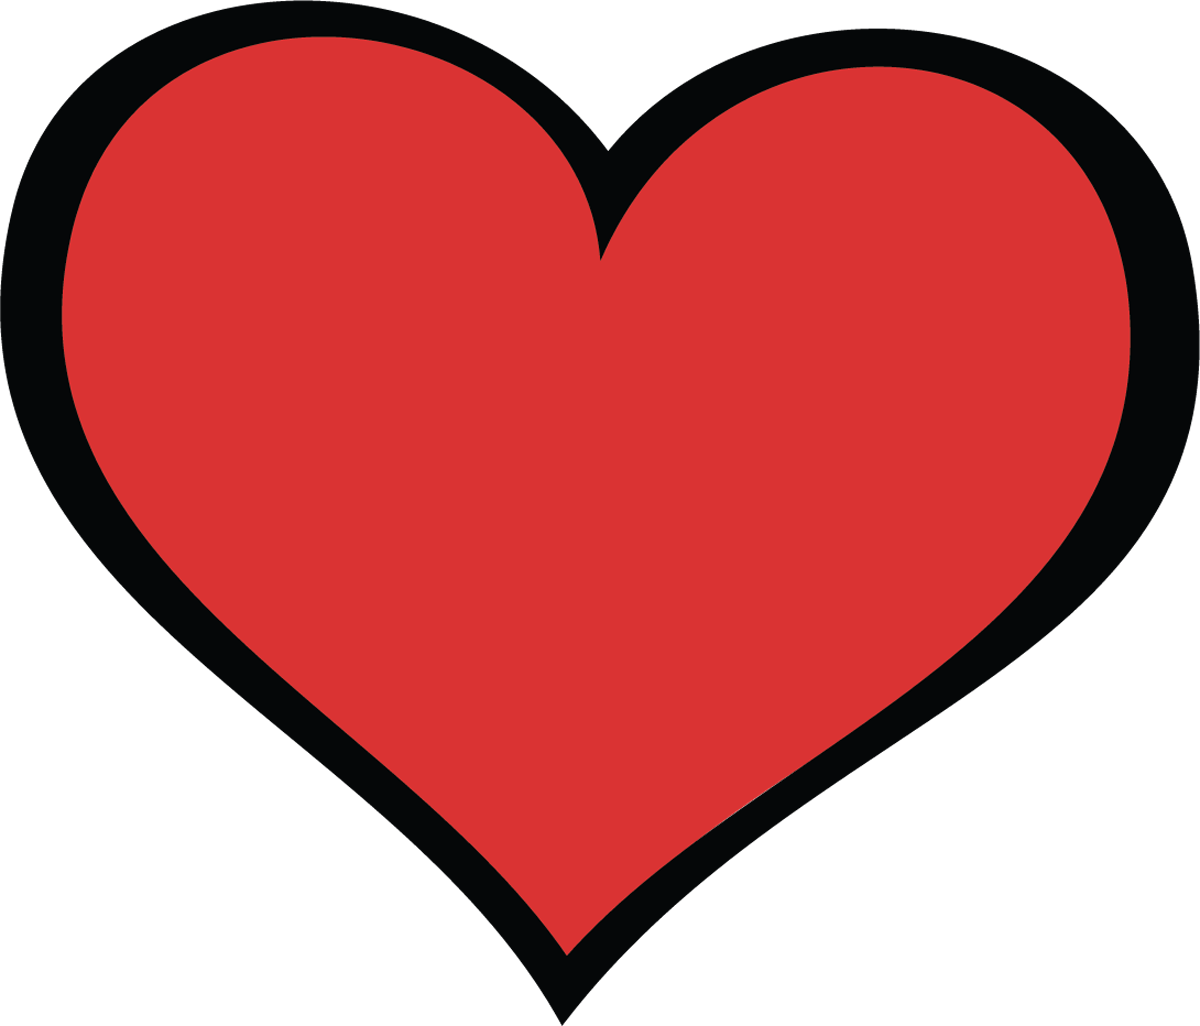 Clipart of hearts in love - ClipartFox